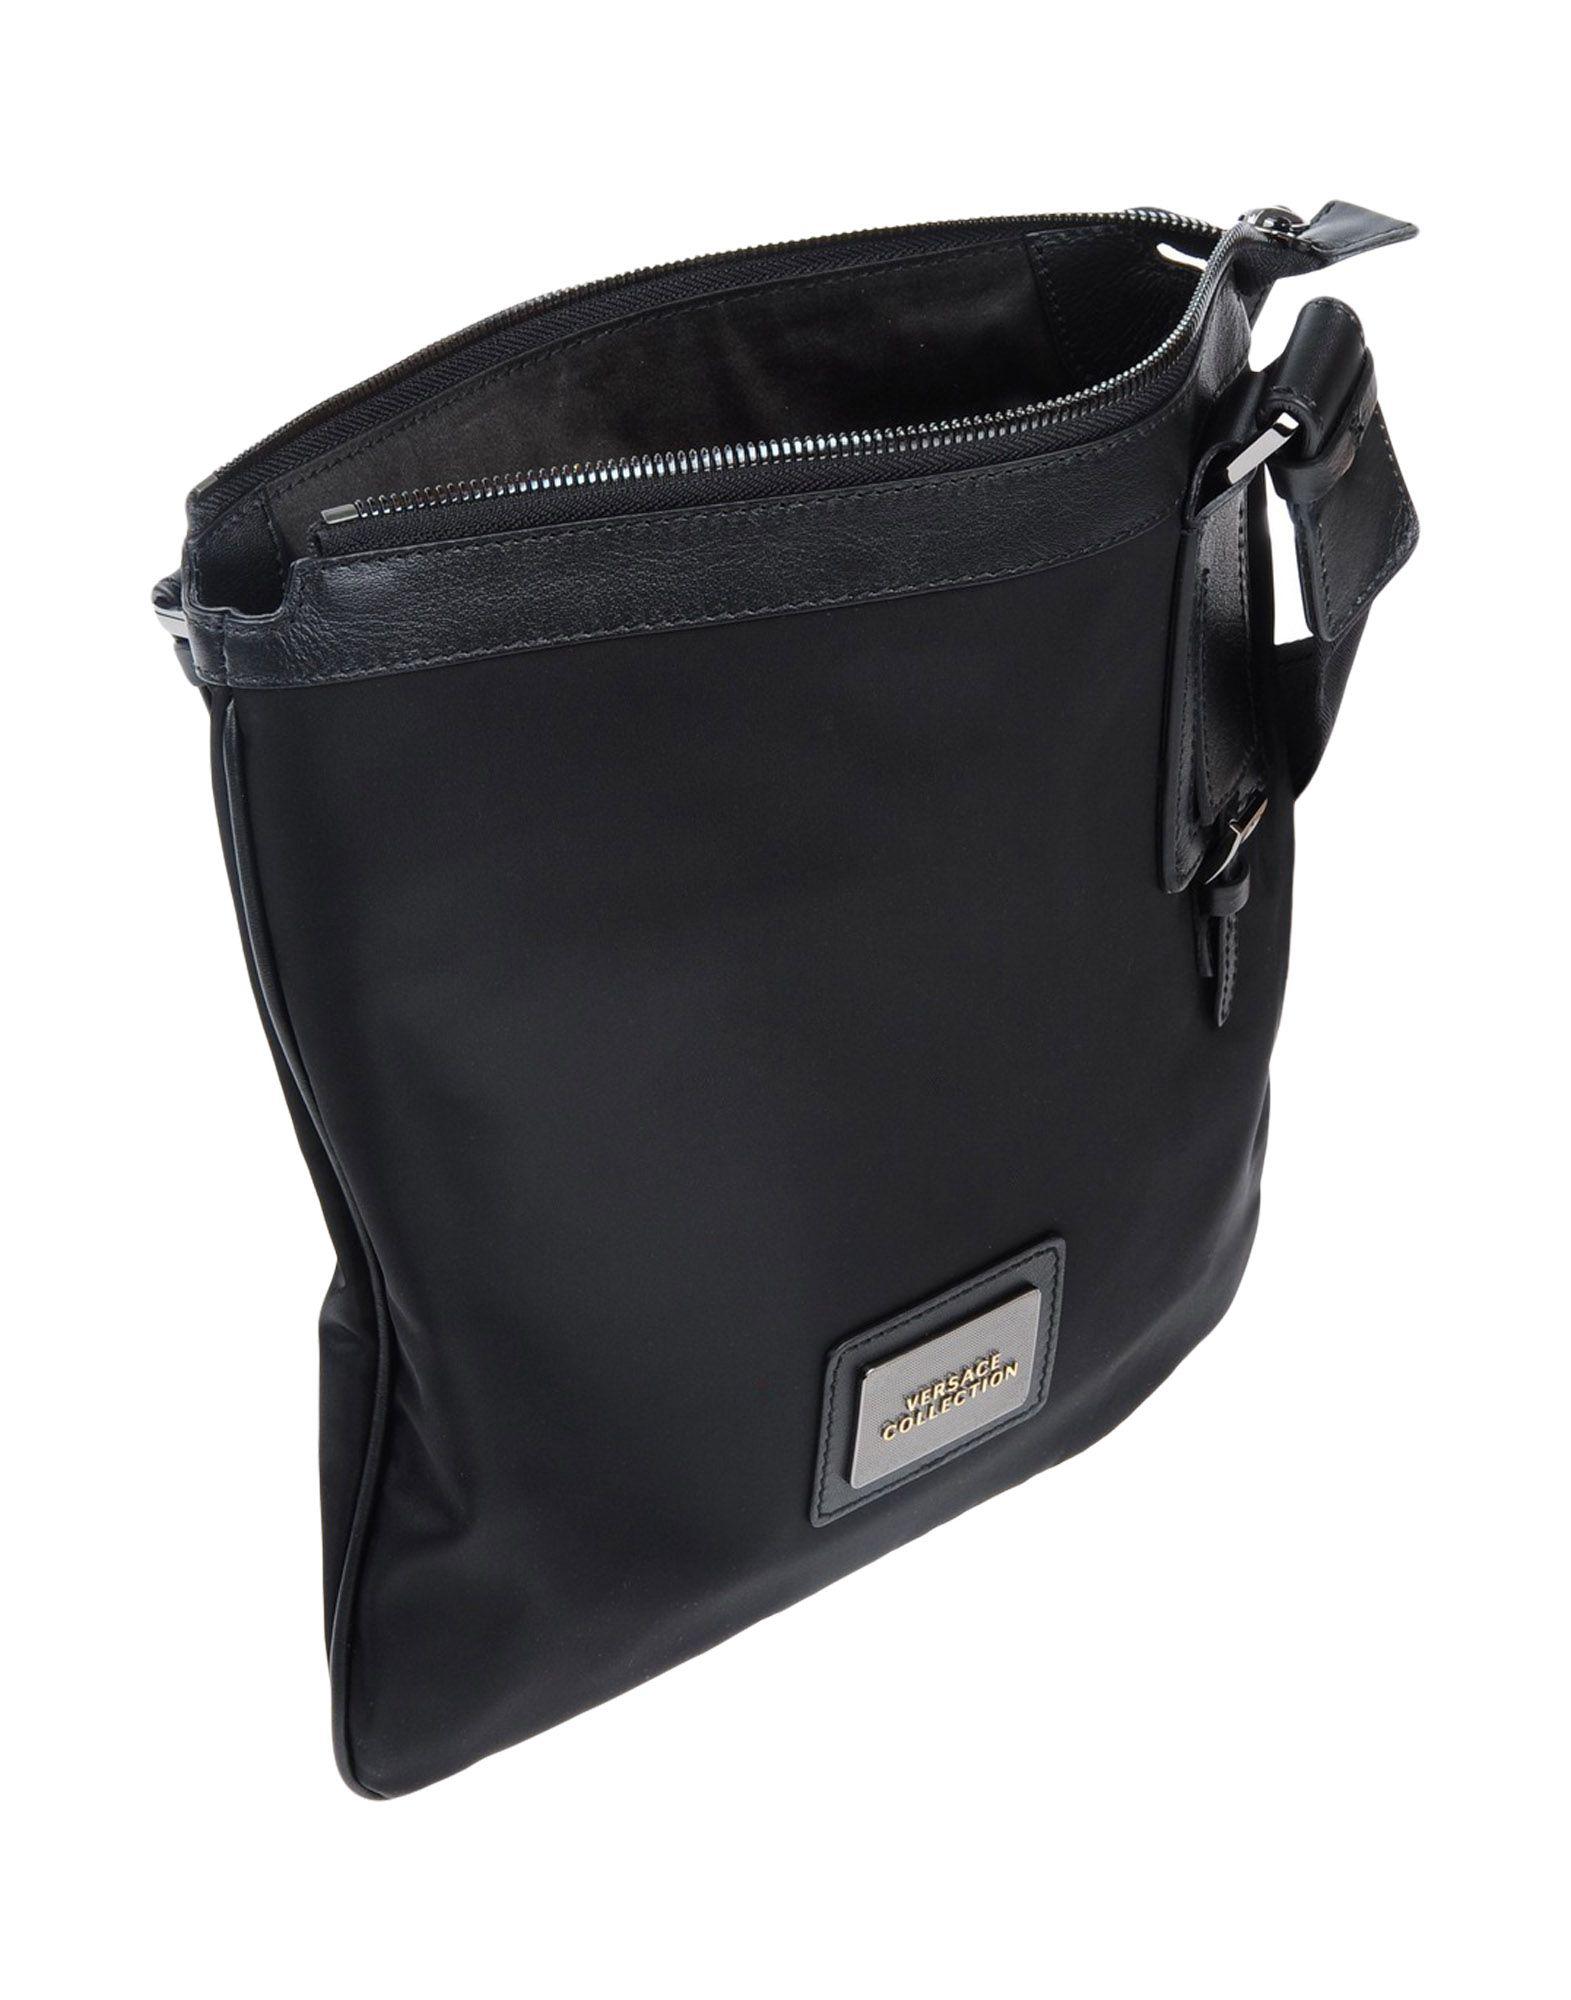 Versace Cross-body Bag in Black for Men - Lyst